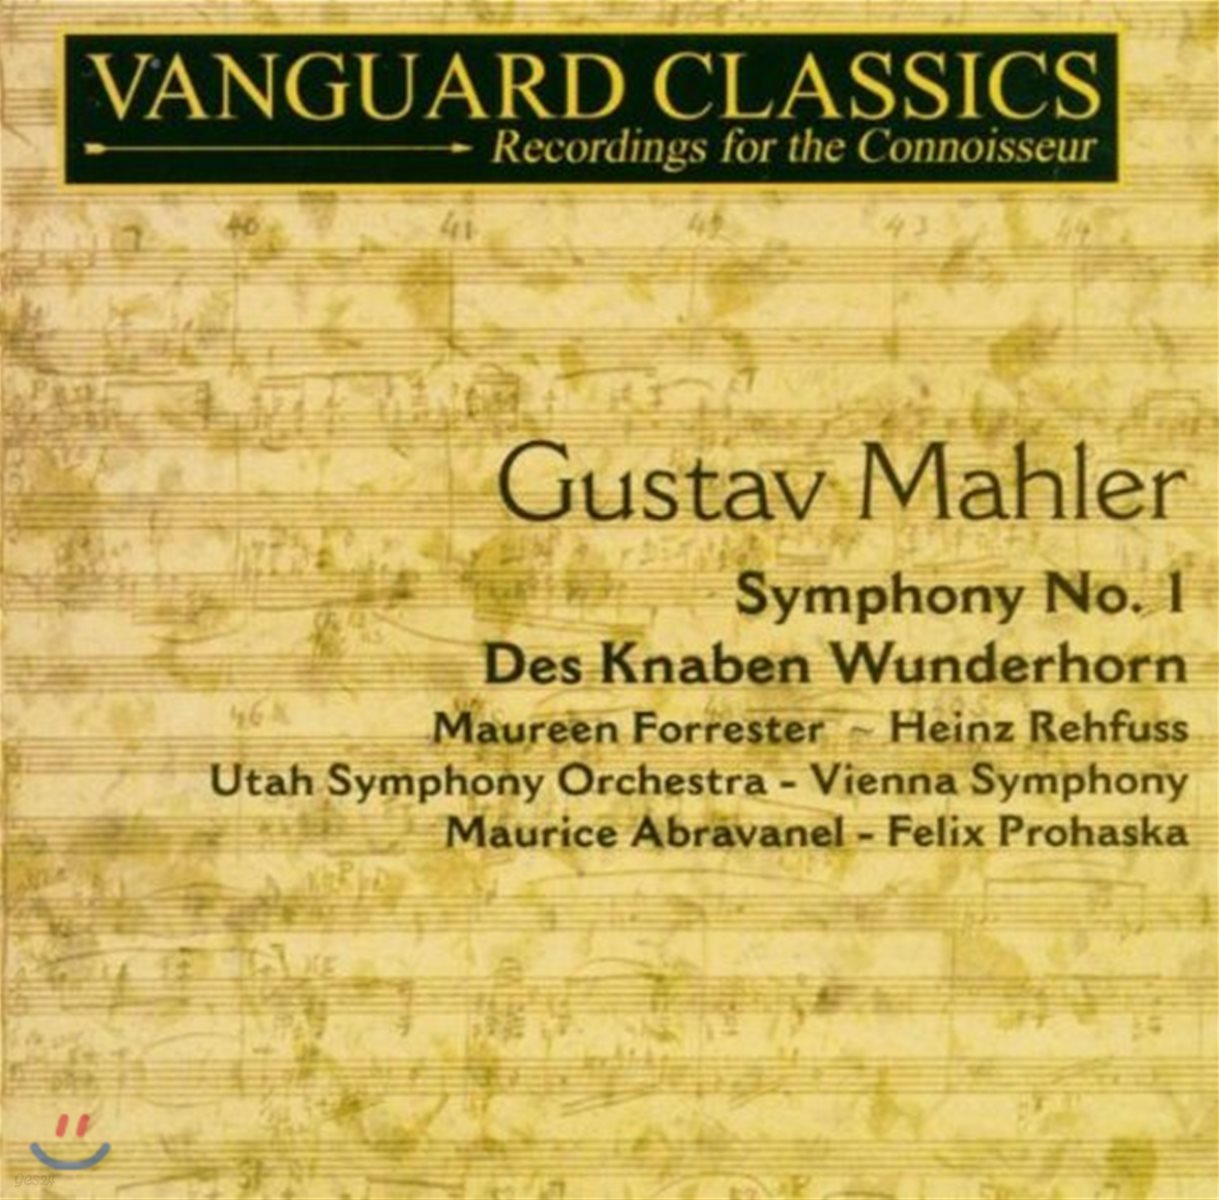 Maurice Abravanel 말러: 교향곡 1번, 가곡 '어린이의 이상한 뿔피리' - 모린 포레스터, 모리스 아브라바넬, 펠릭스 프로하스카 (Mahler: Symphony No.1, Lieder 'Des Knaben Wunderhorn')